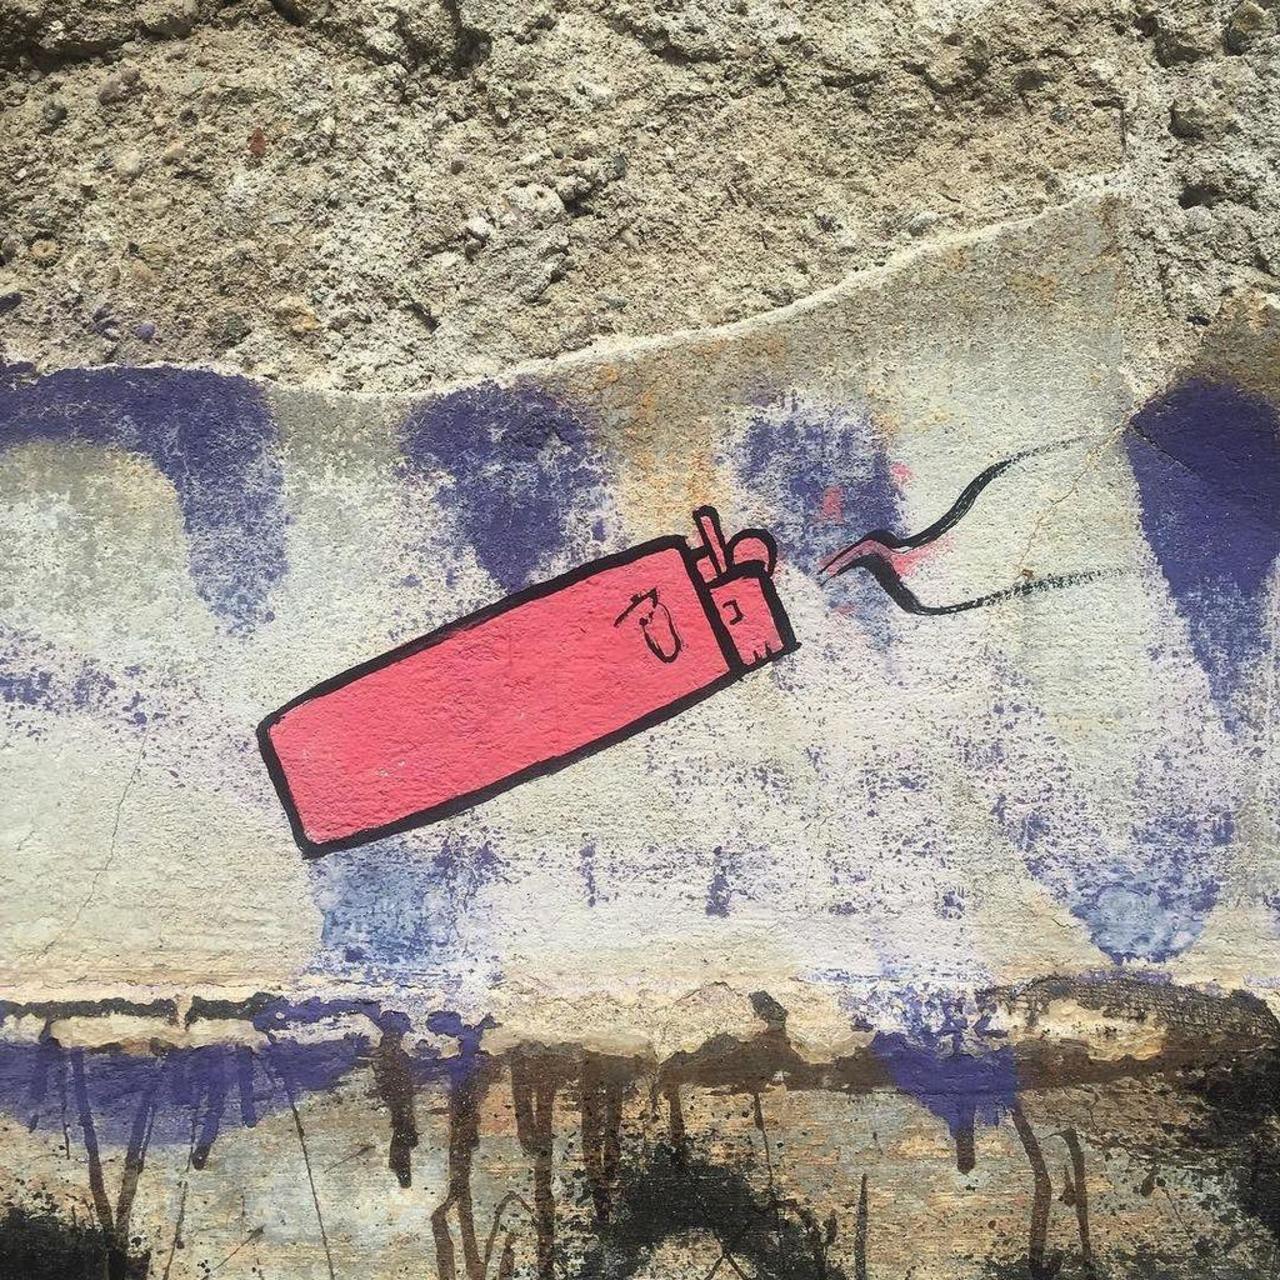 Graffiti Art
Athens, Greece
#graff #graffiti #graffitiathens #outsider #outsiderart #street #streetart #streetartat… http://t.co/0ExbCsRy8Y